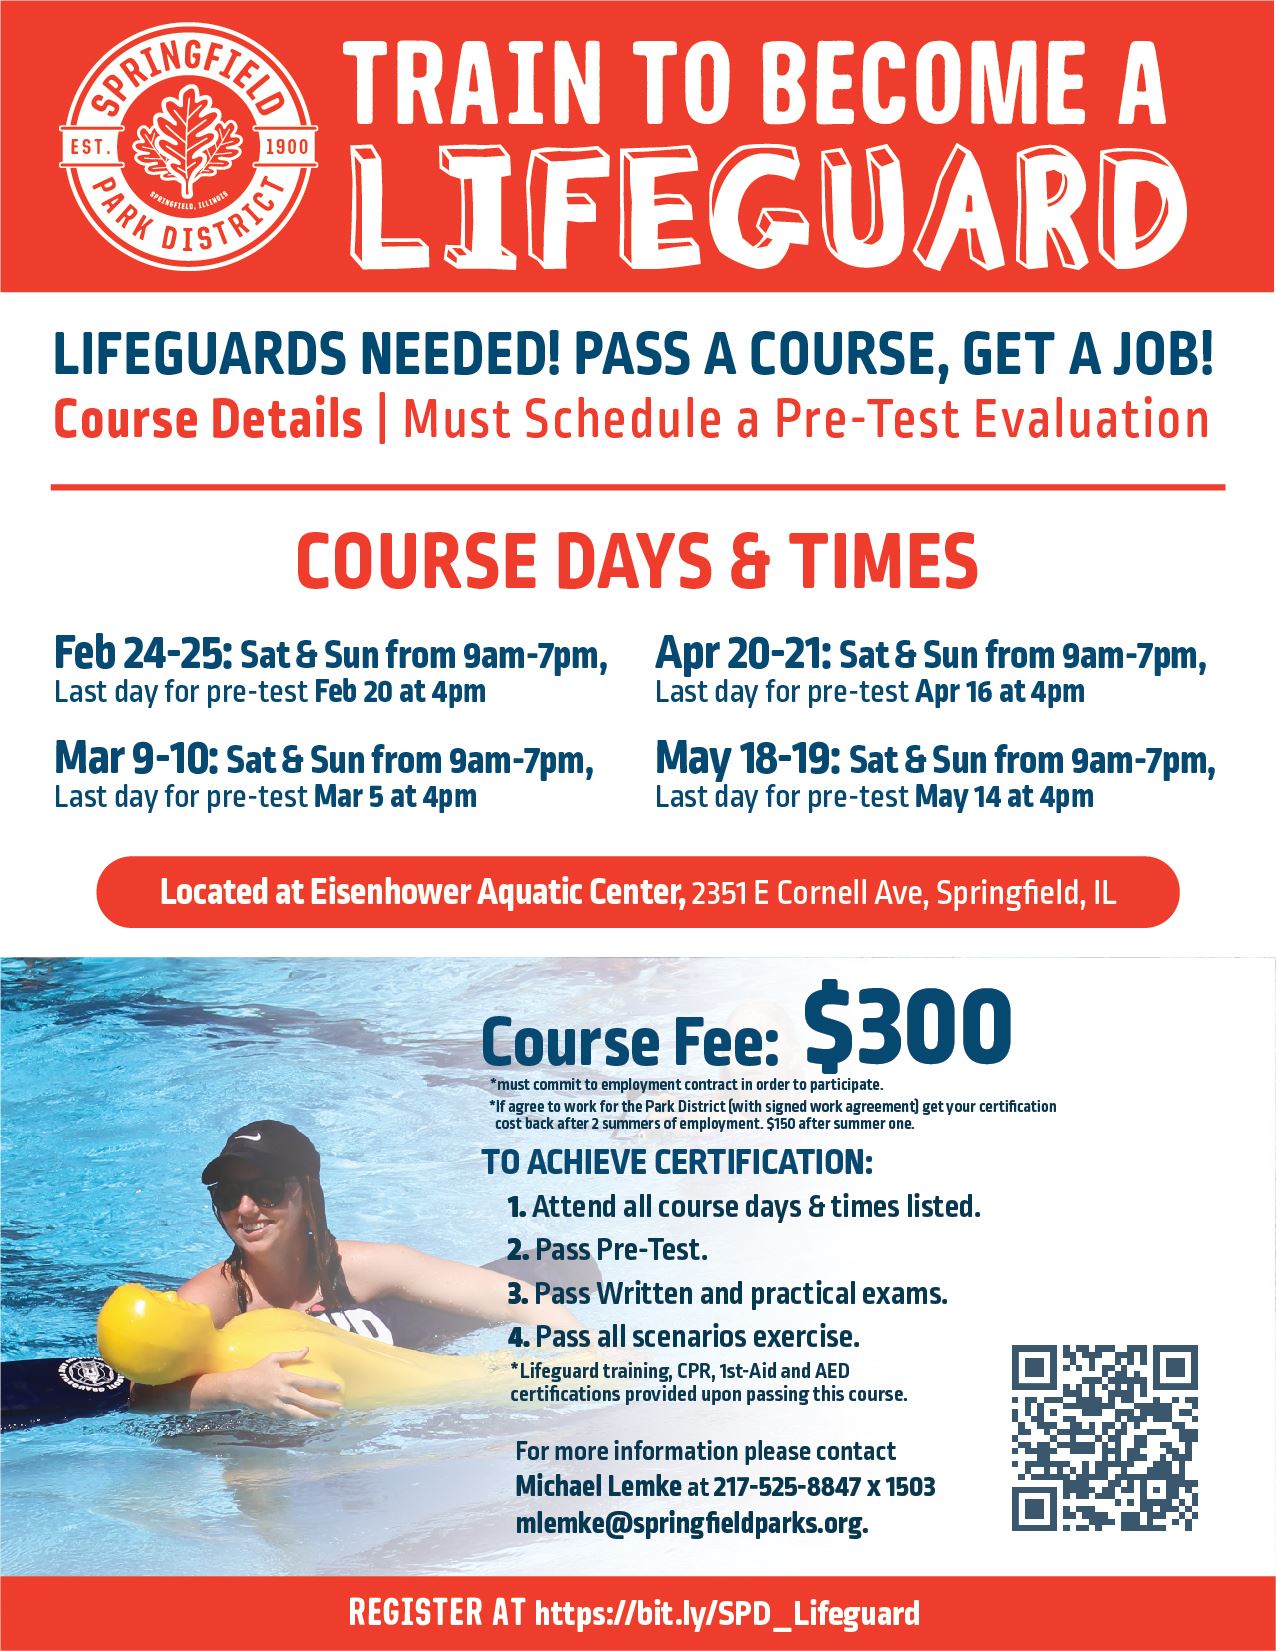 free_lifeguarding_classes_image.jpg